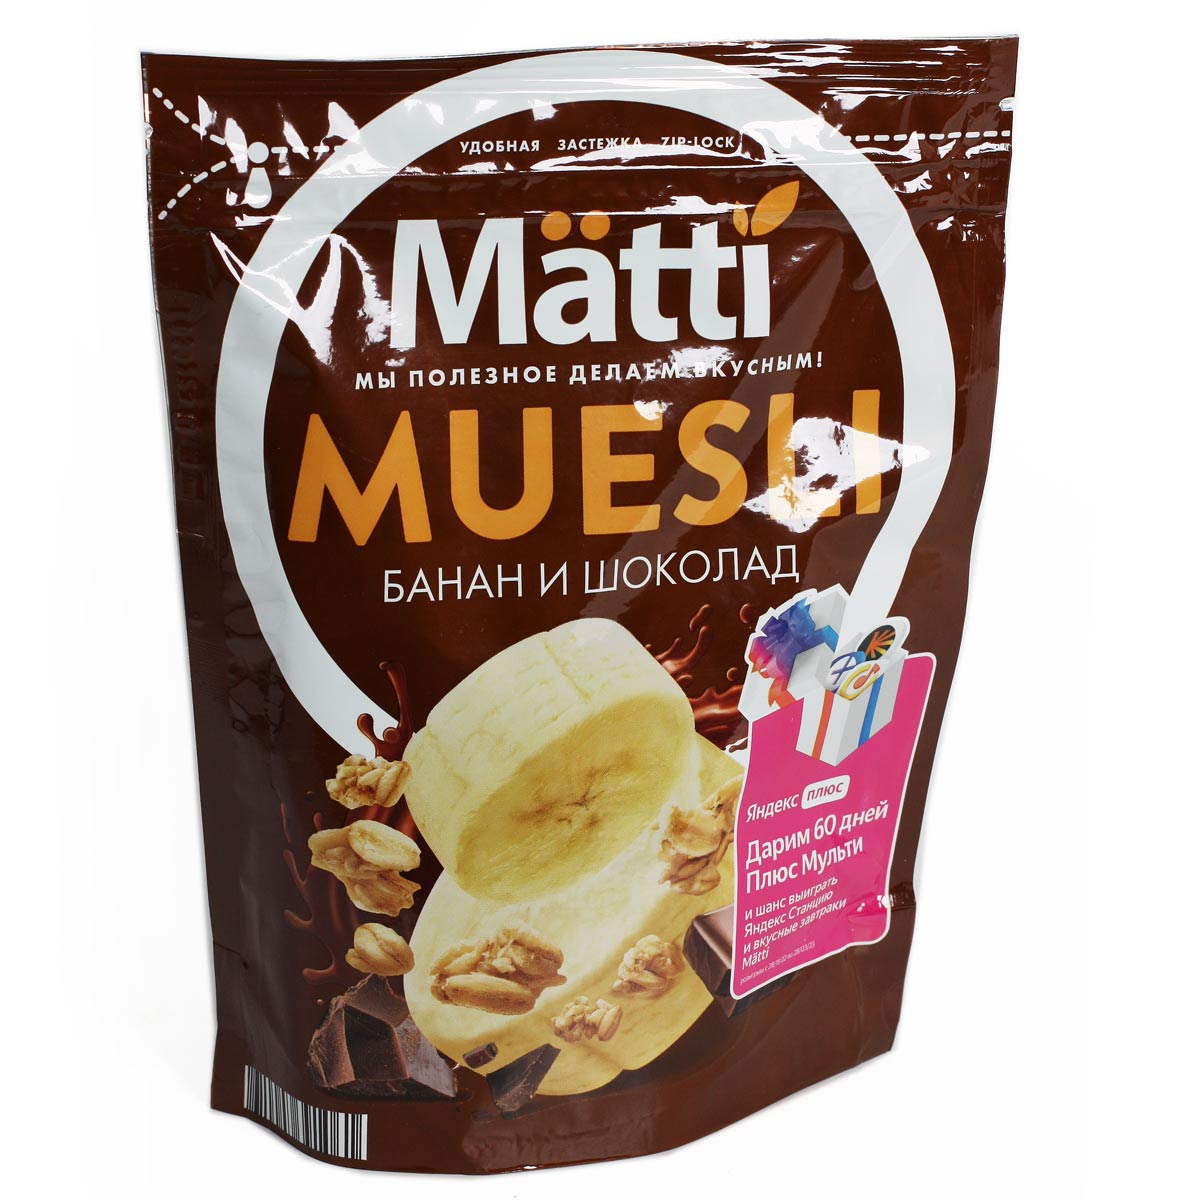 MATTI Мюсли Матти с бананом и шоколадом 250г